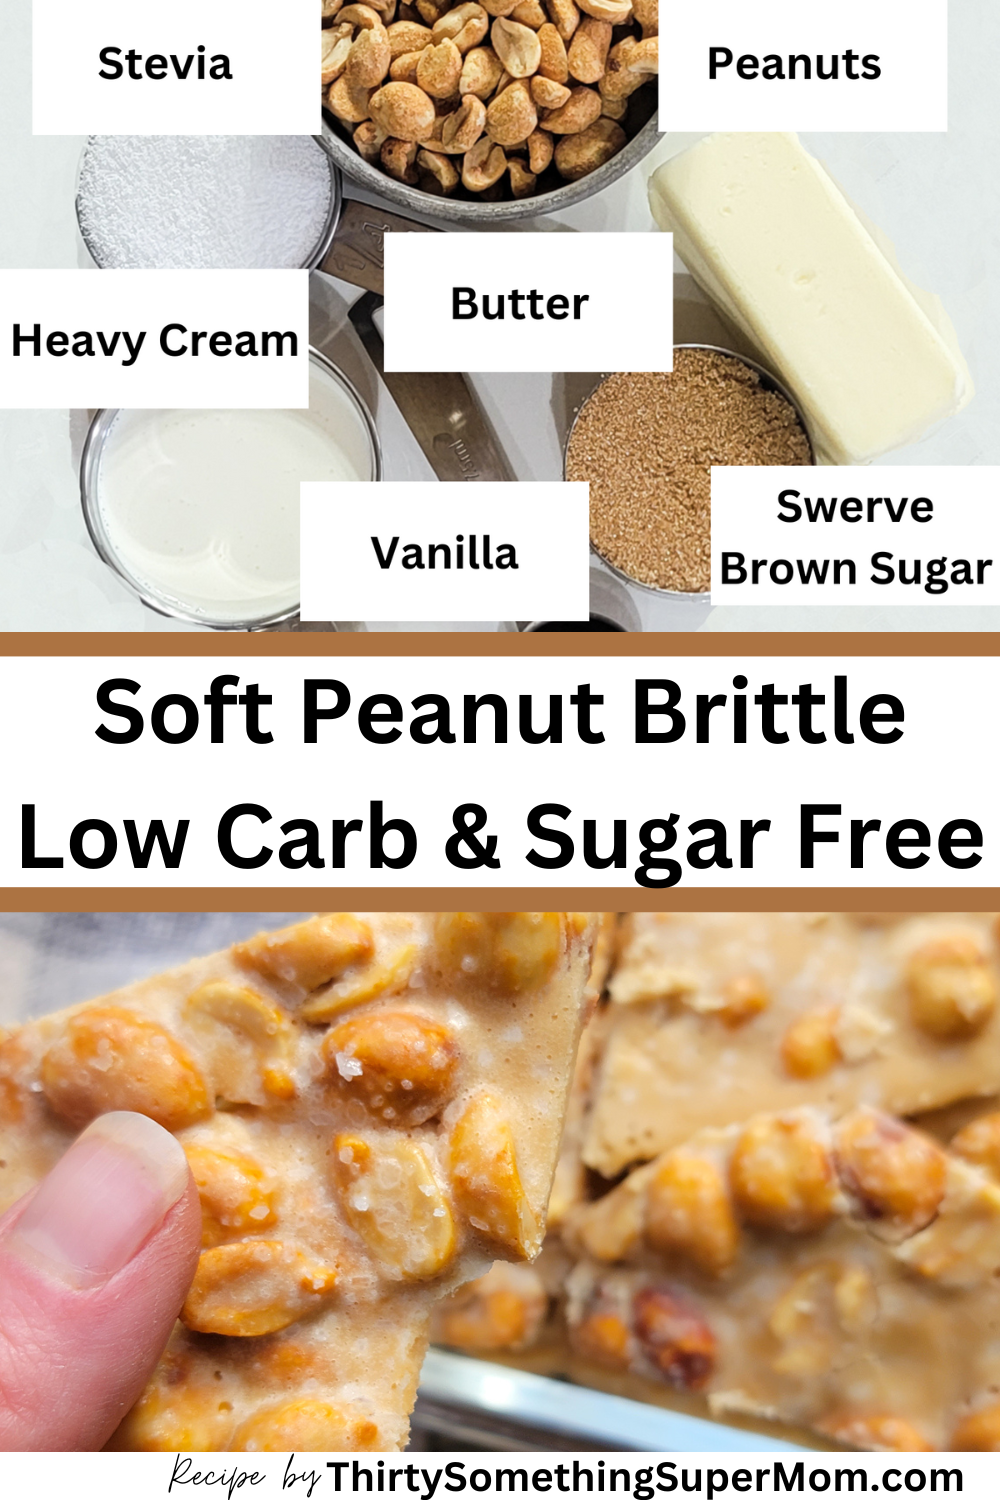 soft peanut brittle recipe infogrpahic. 